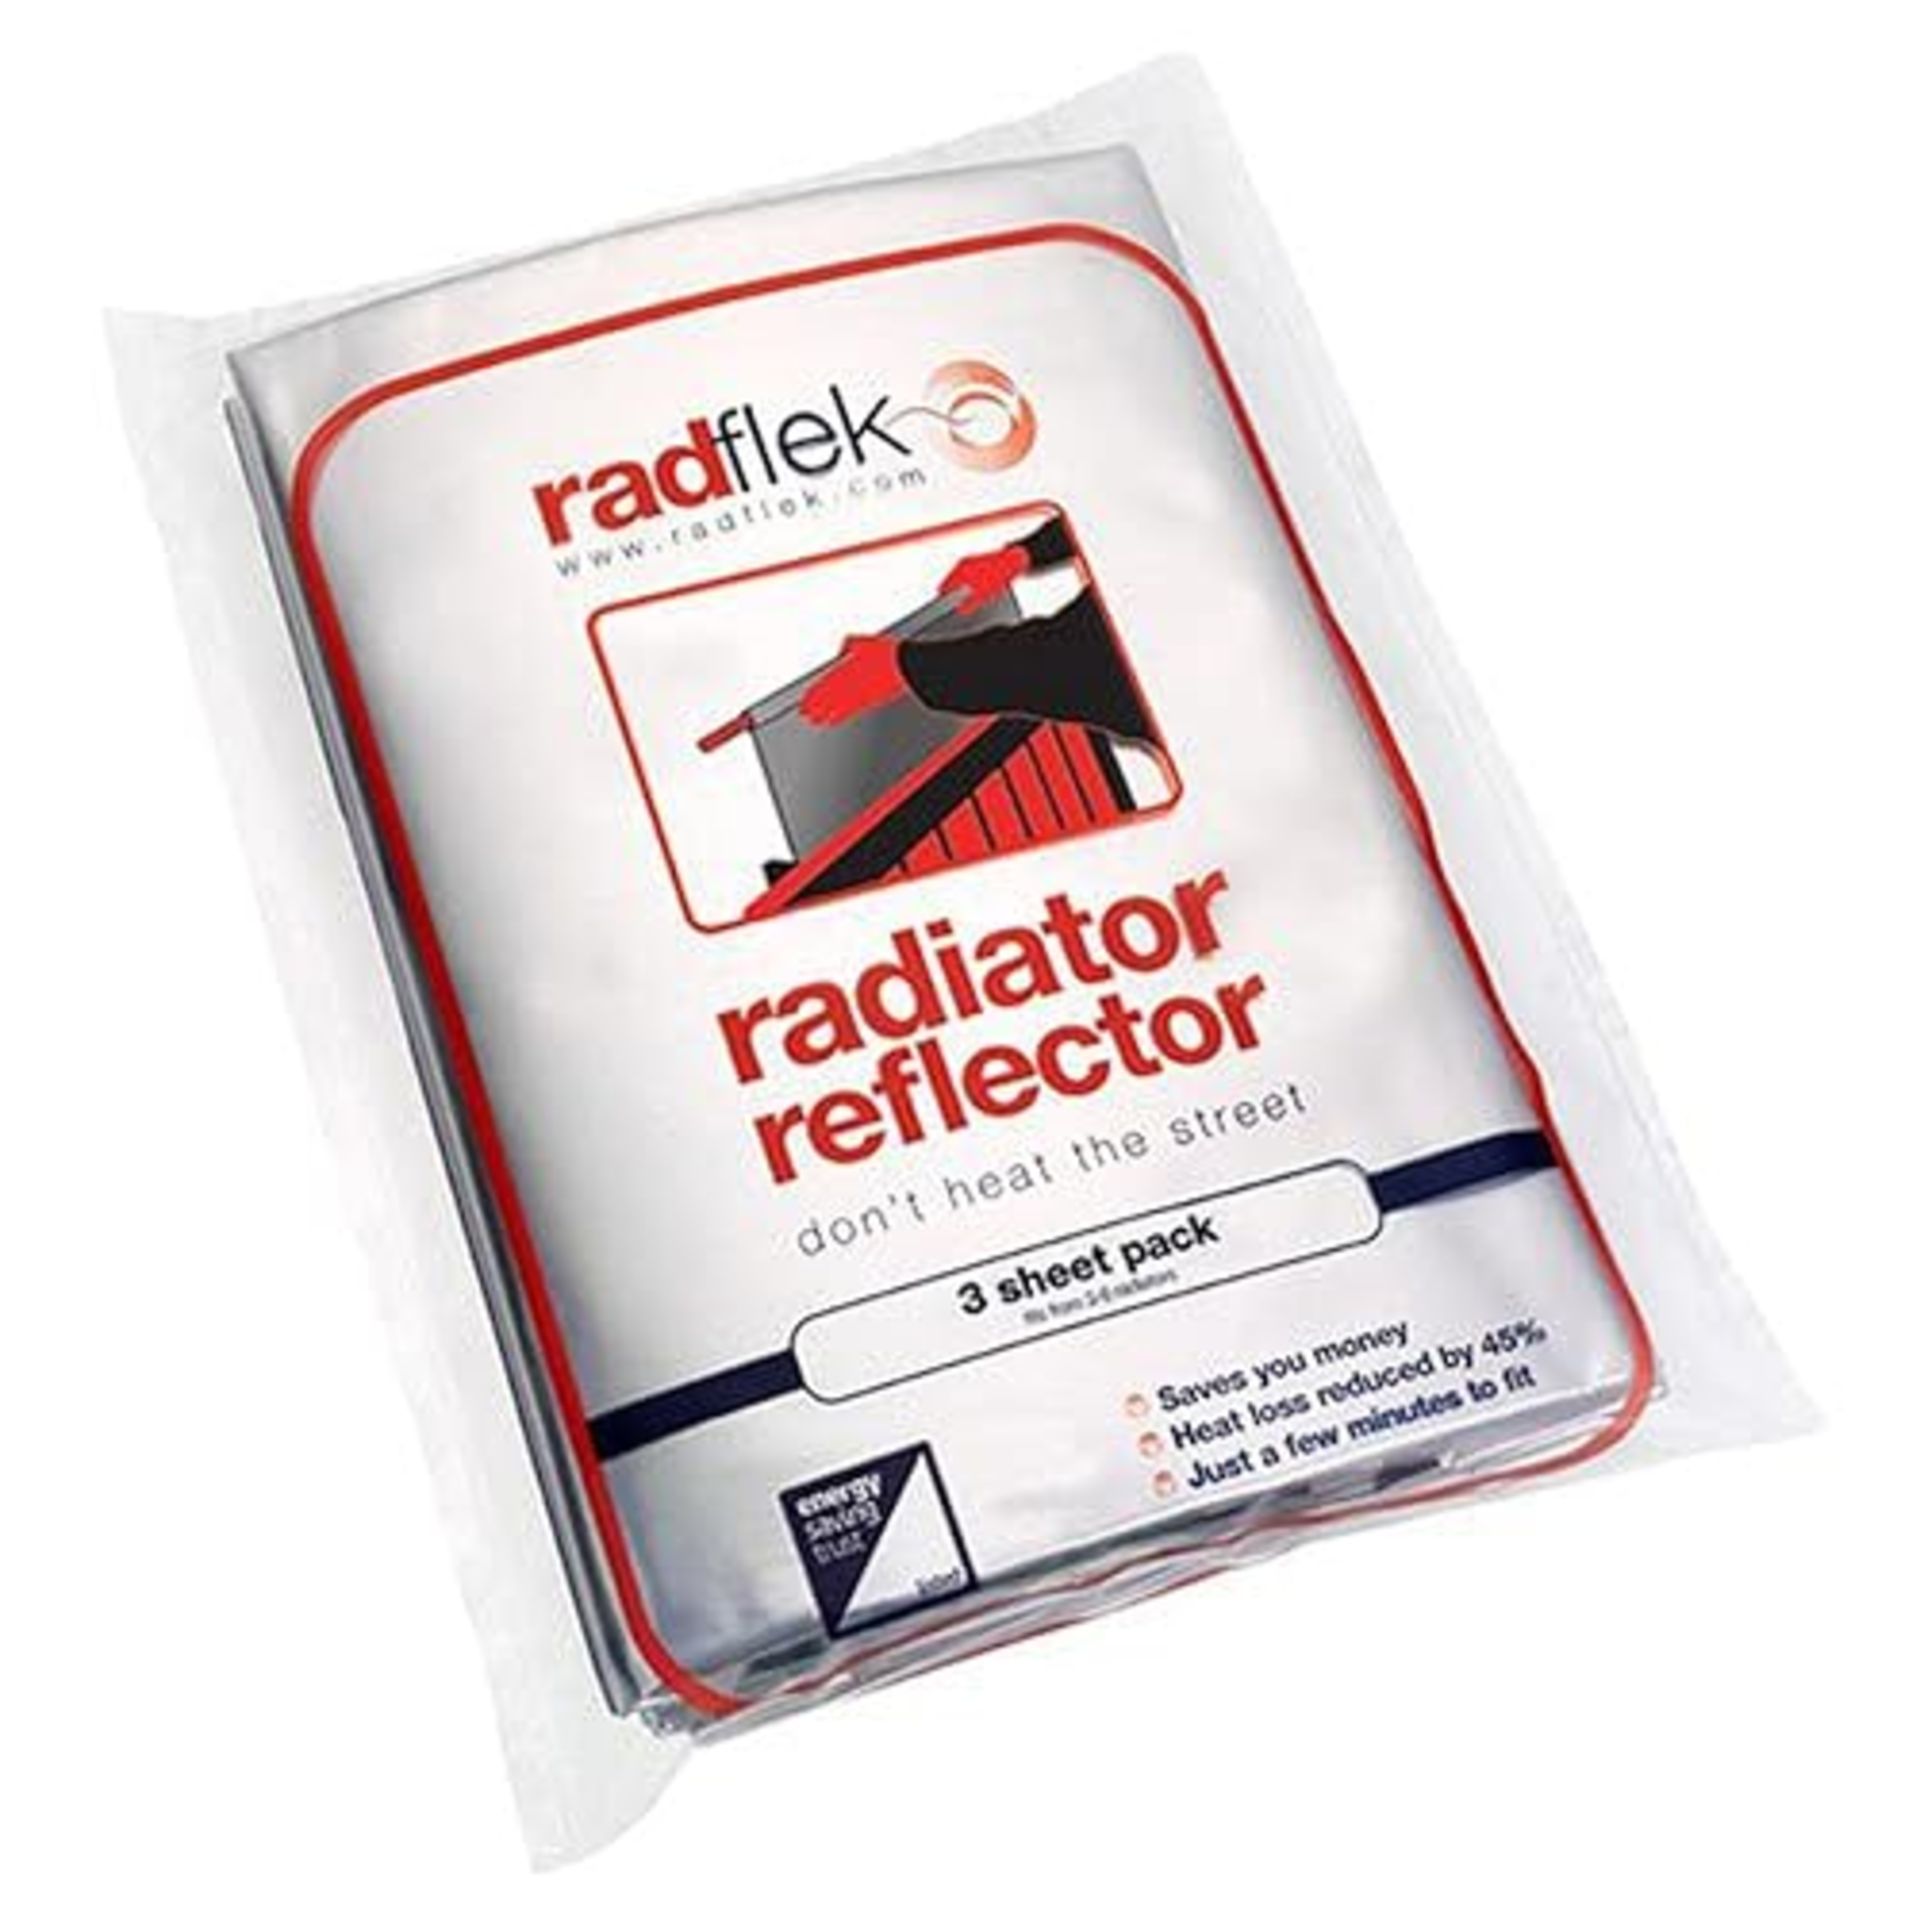 Radflek 3-Pack Insulation, Silver, 3 Sheets